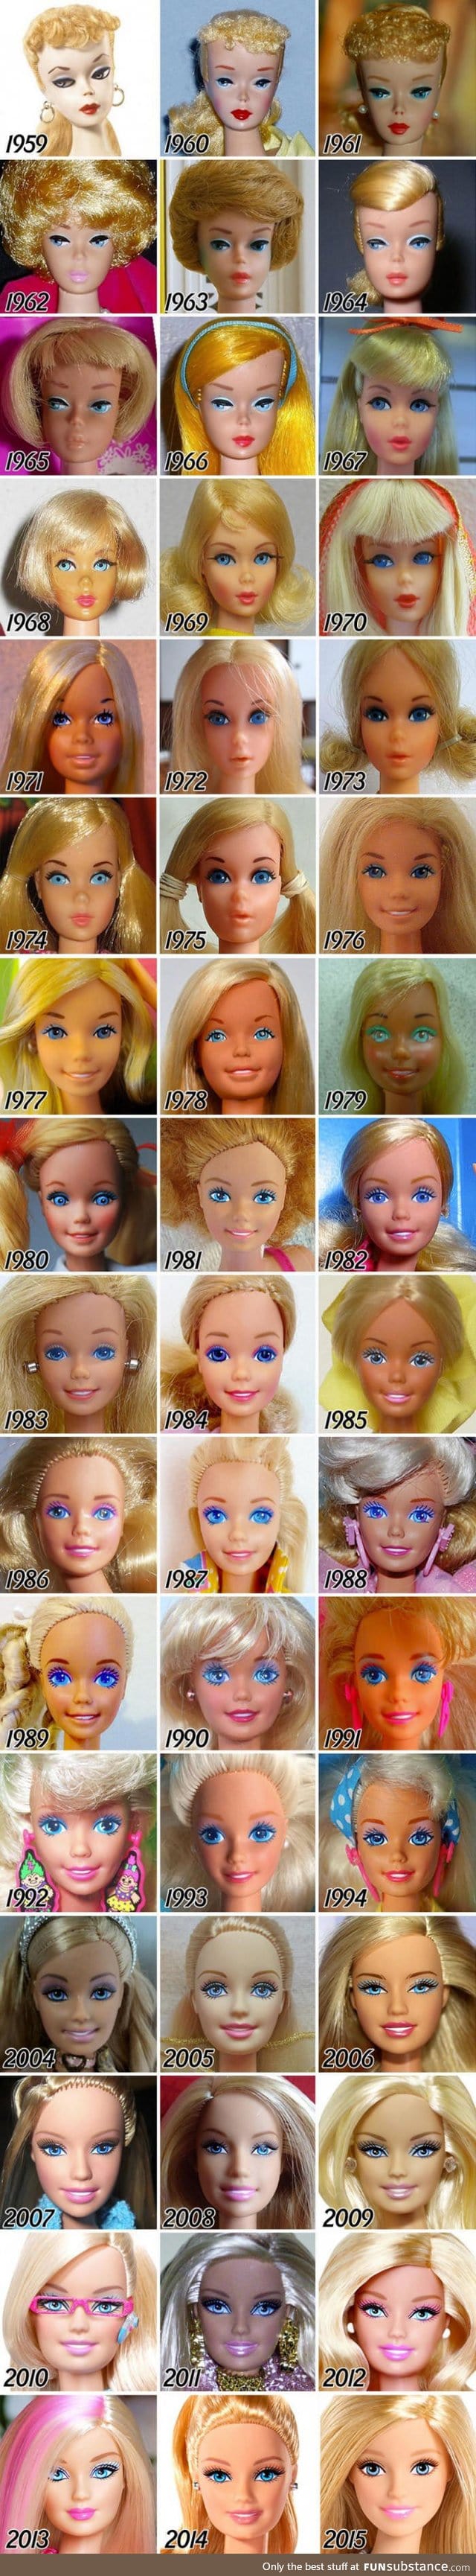 The evolution of Barbie